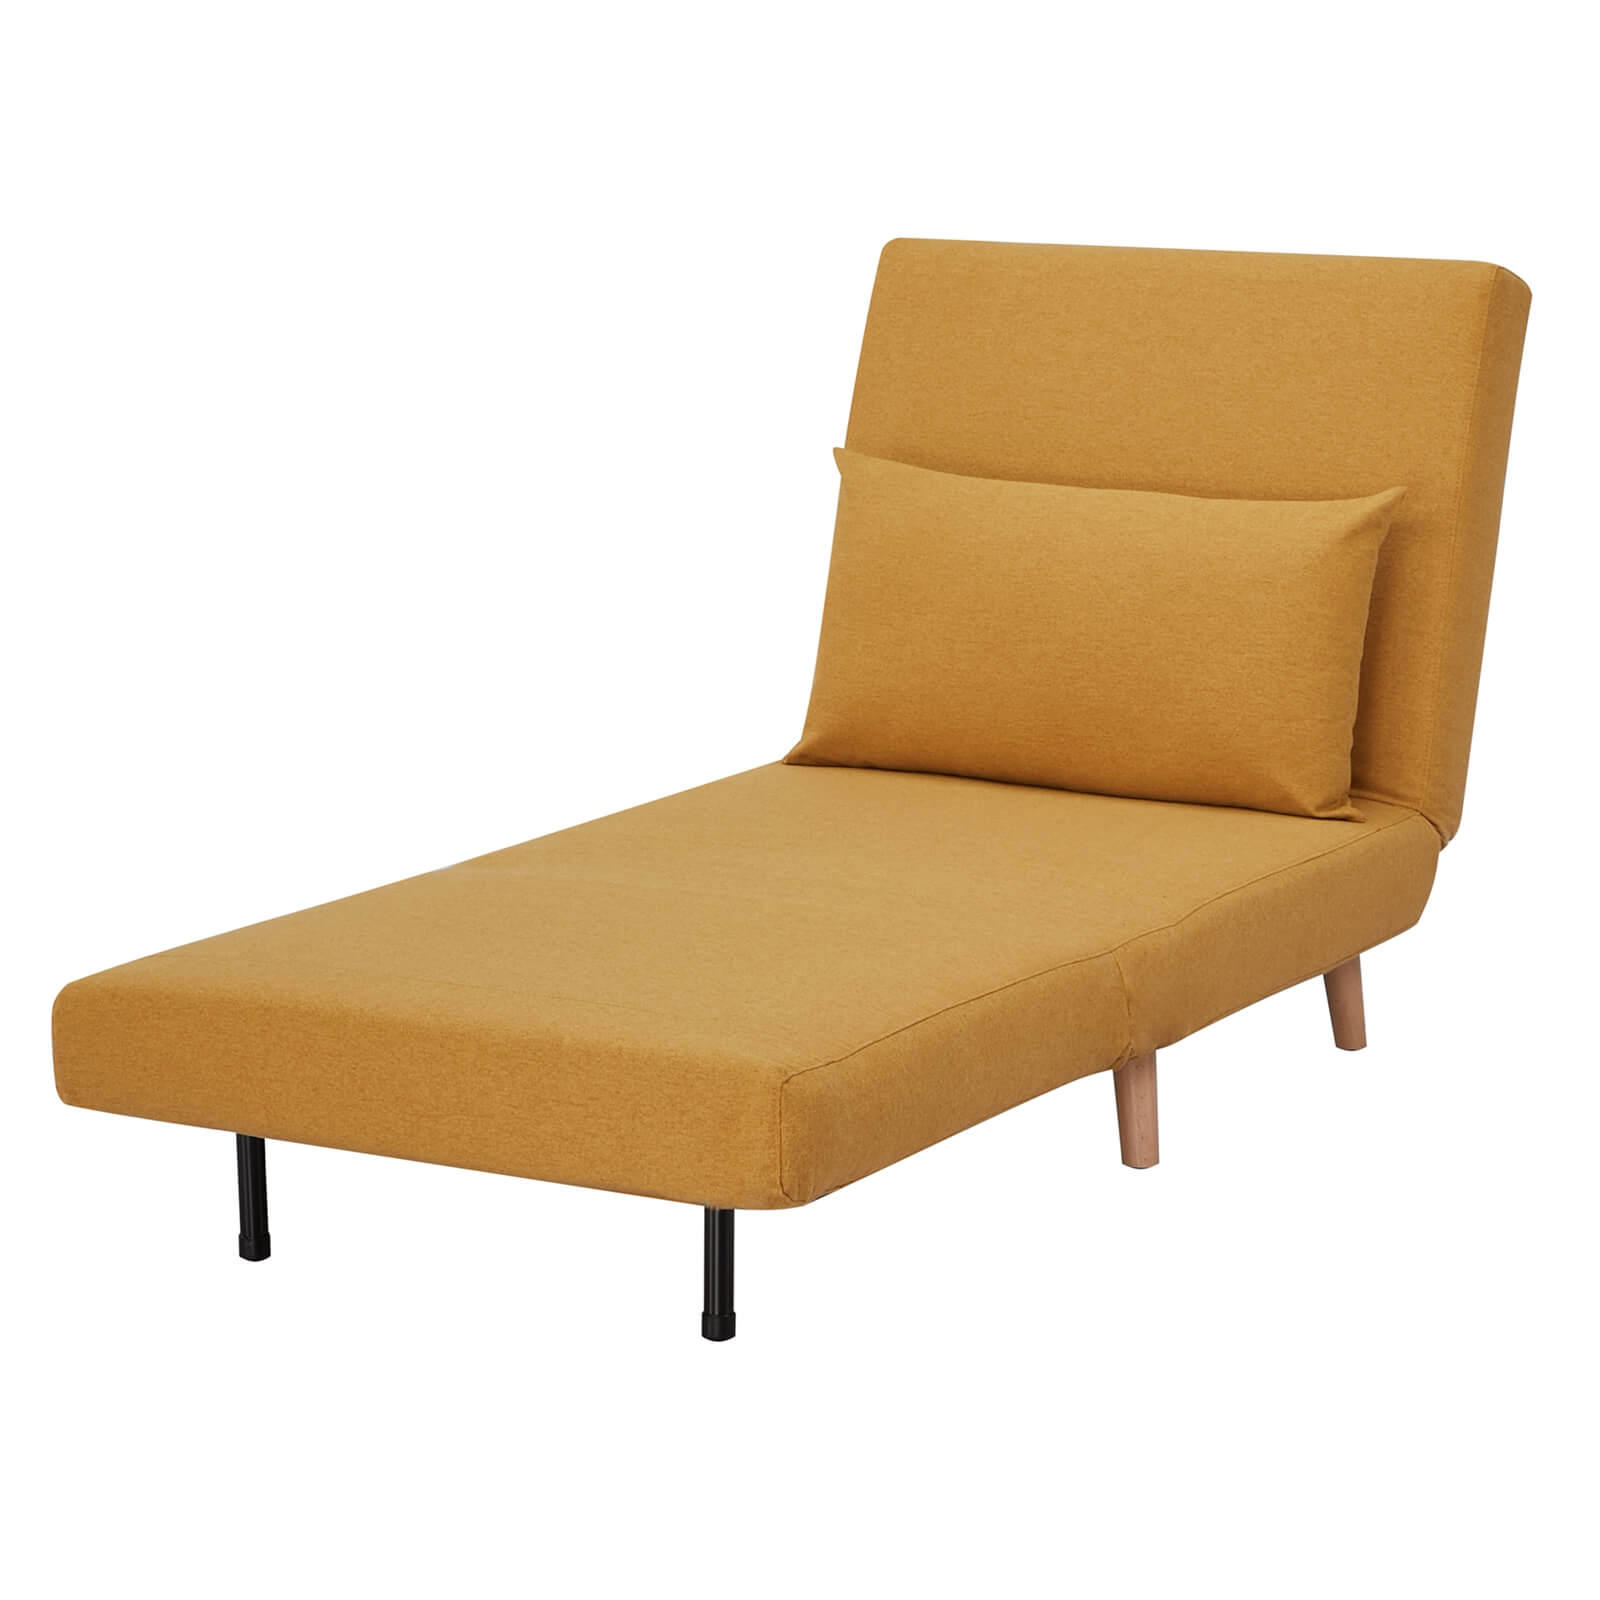 Freya Folding Chair Bed - Ochre